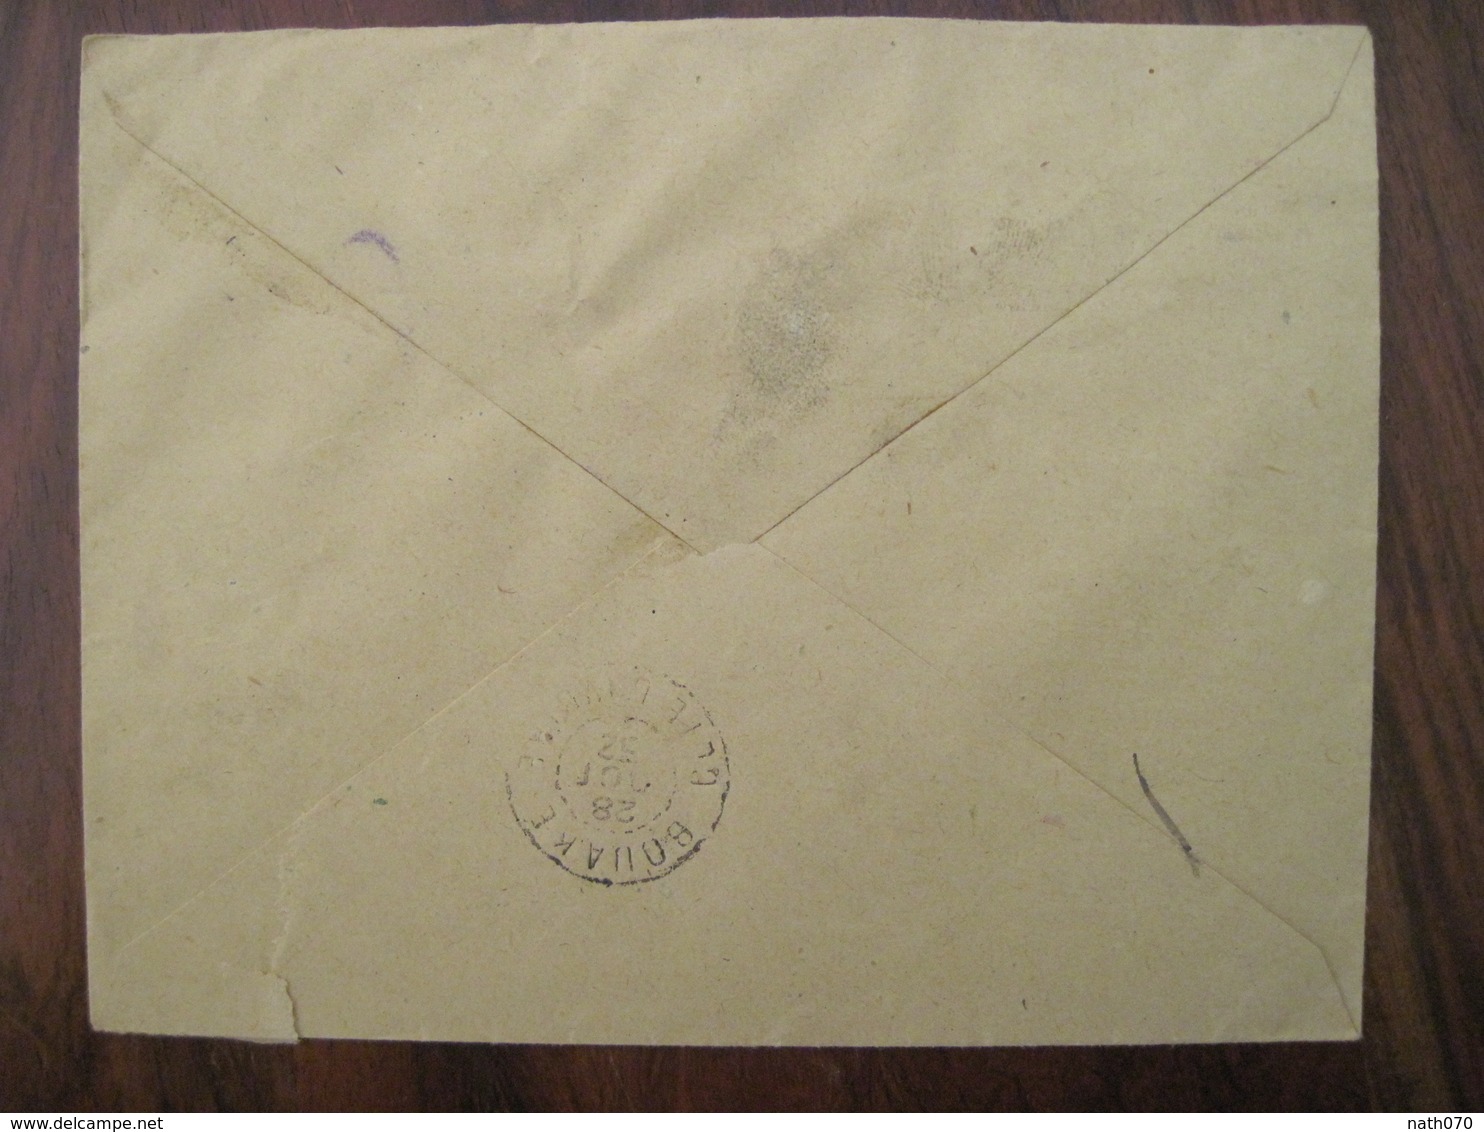 Cote D'Ivoire 1952 France SEGUELA AOF Timbre Lettre Enveloppe Cover Colonie Elfenbeinküste Ivoiry Coast - Covers & Documents